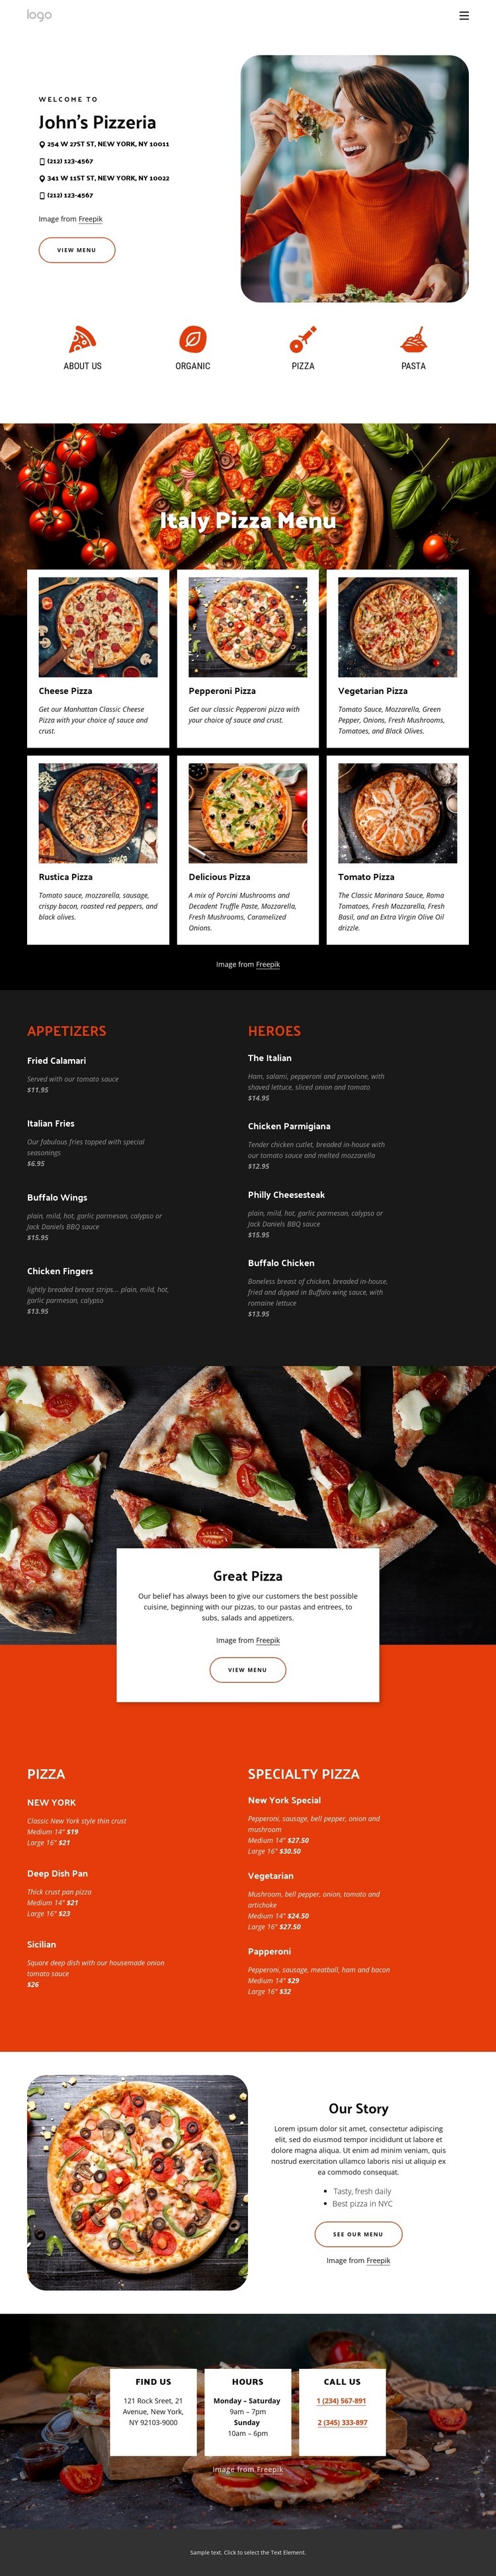 Pizzeria Web Page Design